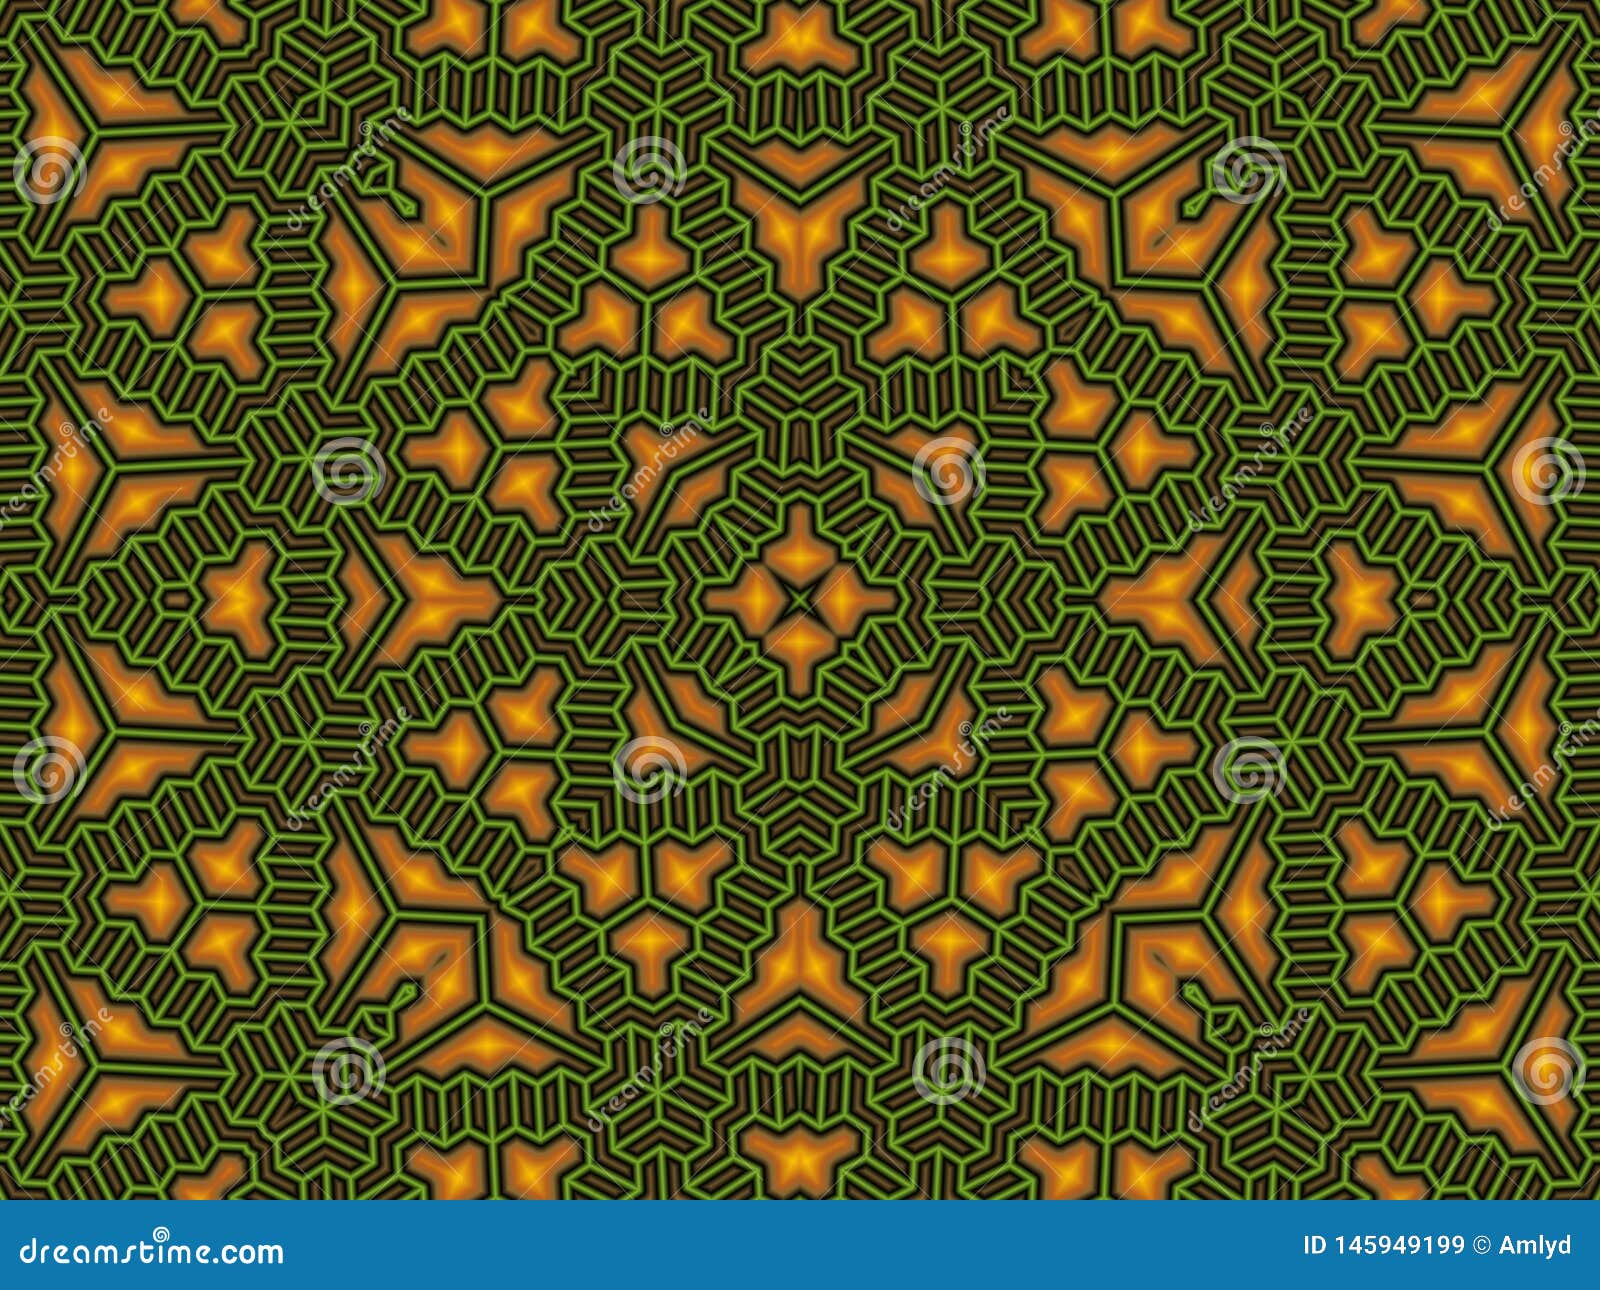 Dizzy pattern illusion stock illustration. Illustration of busy - 145949199